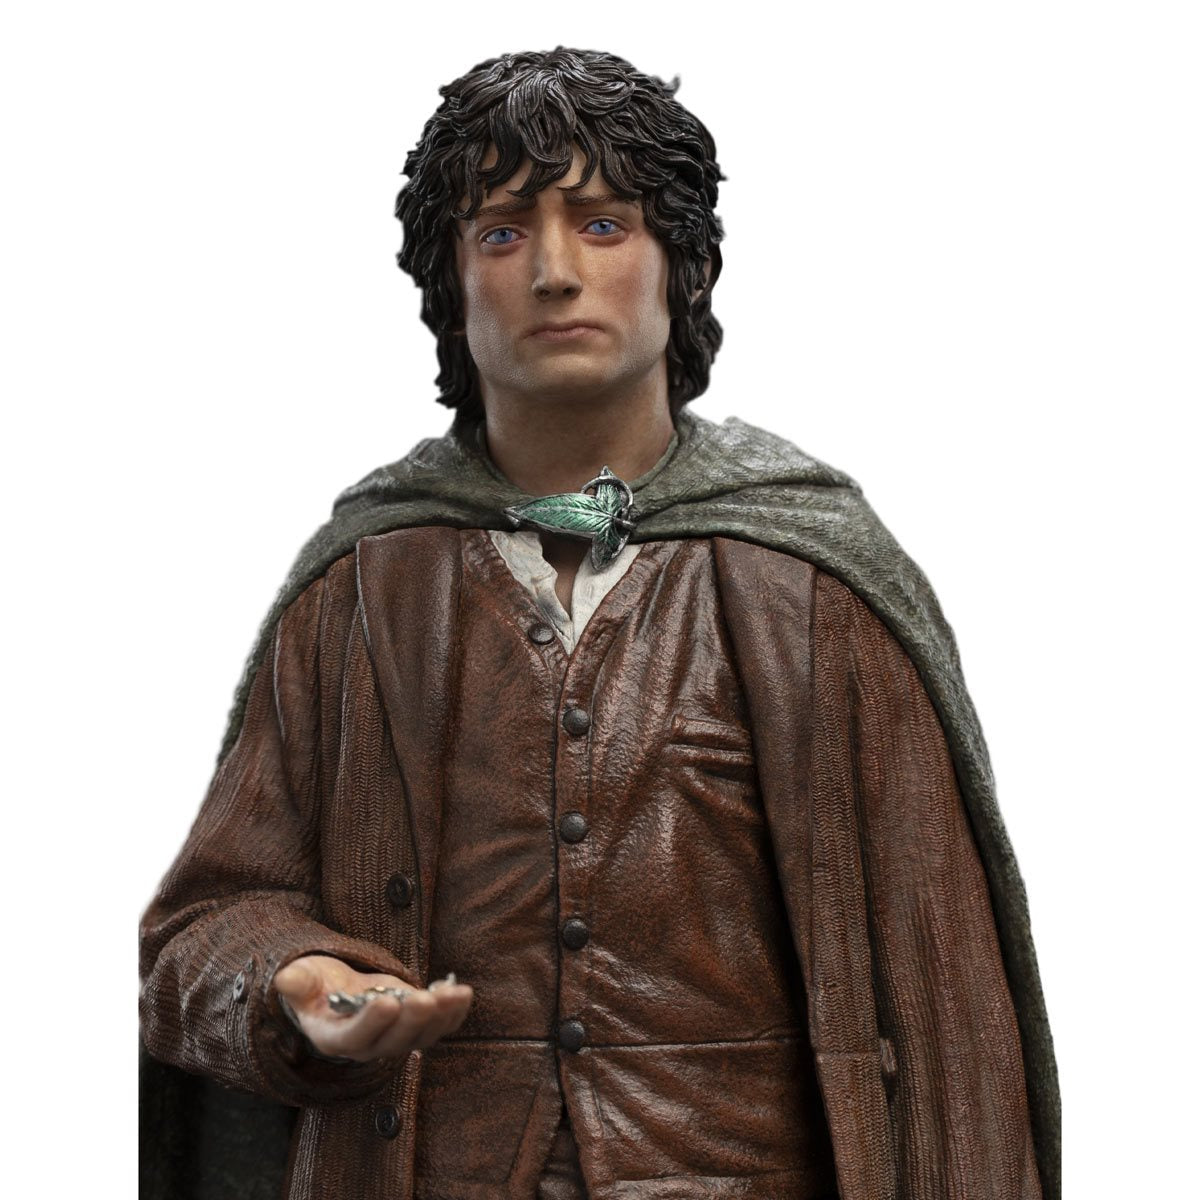 Lord of the Rings Frodo Baggins Ringbearer 1:6 Scale Statue by Weta Workshop -Weta Workshop - India - www.superherotoystore.com